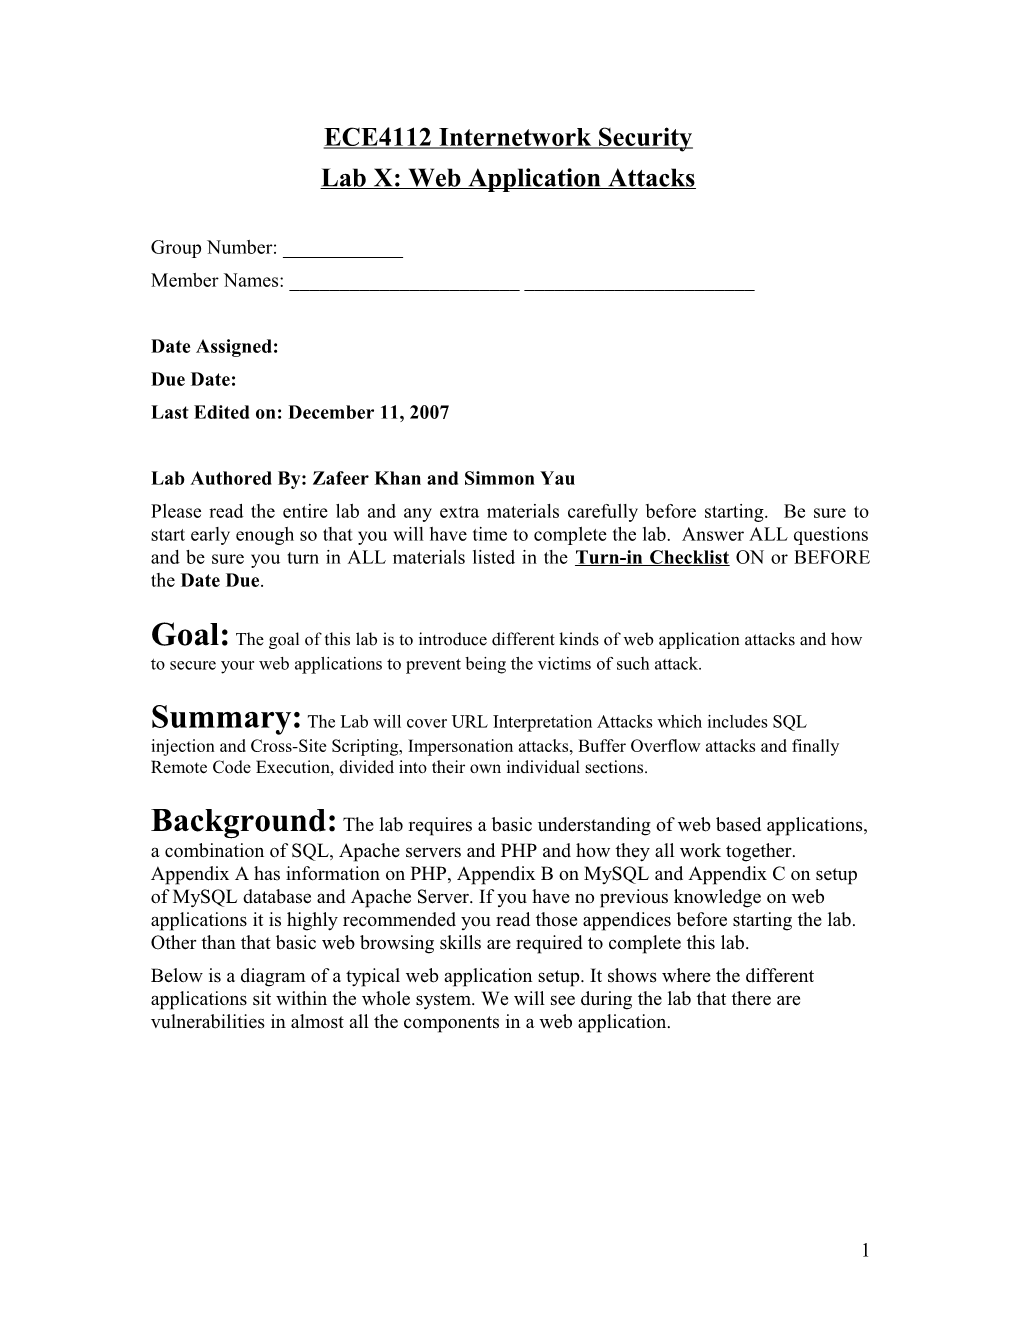 Lab X: Web Application Attacks